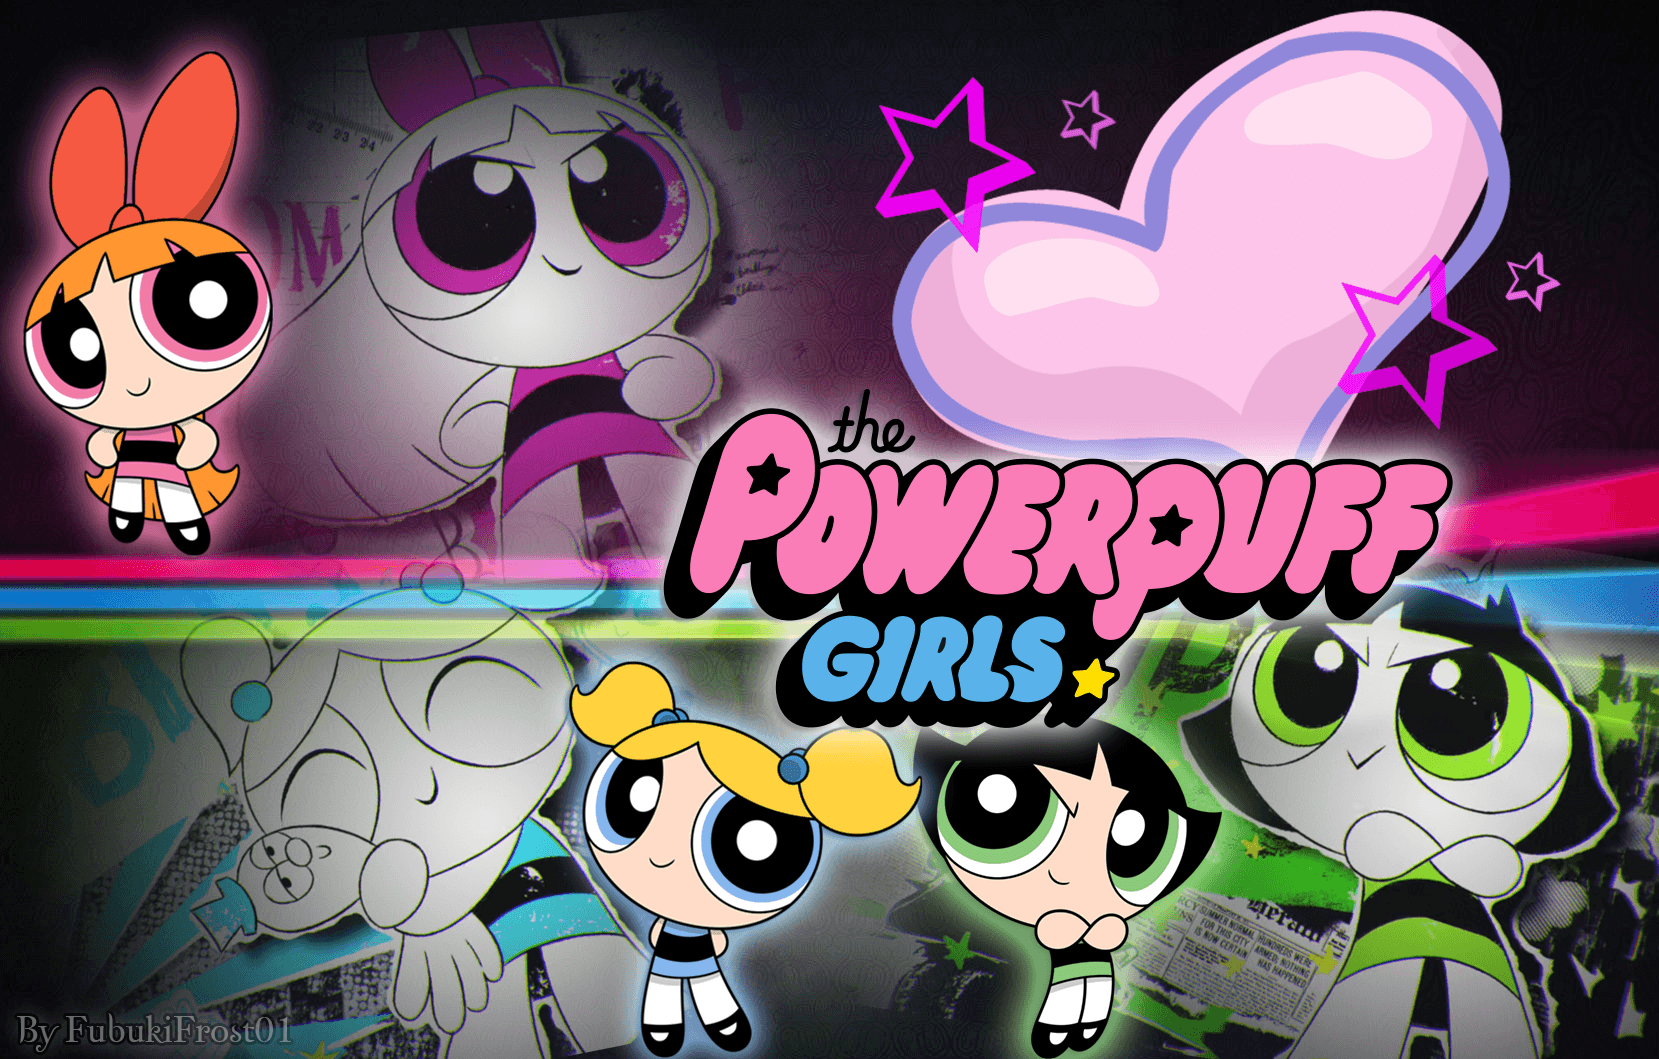 Powerpuff Girls Wallpaper. Powerpuff Girls Background, The Powerpuff Girls Movie Wallpaper and Powerpuff Girls Desktop Background